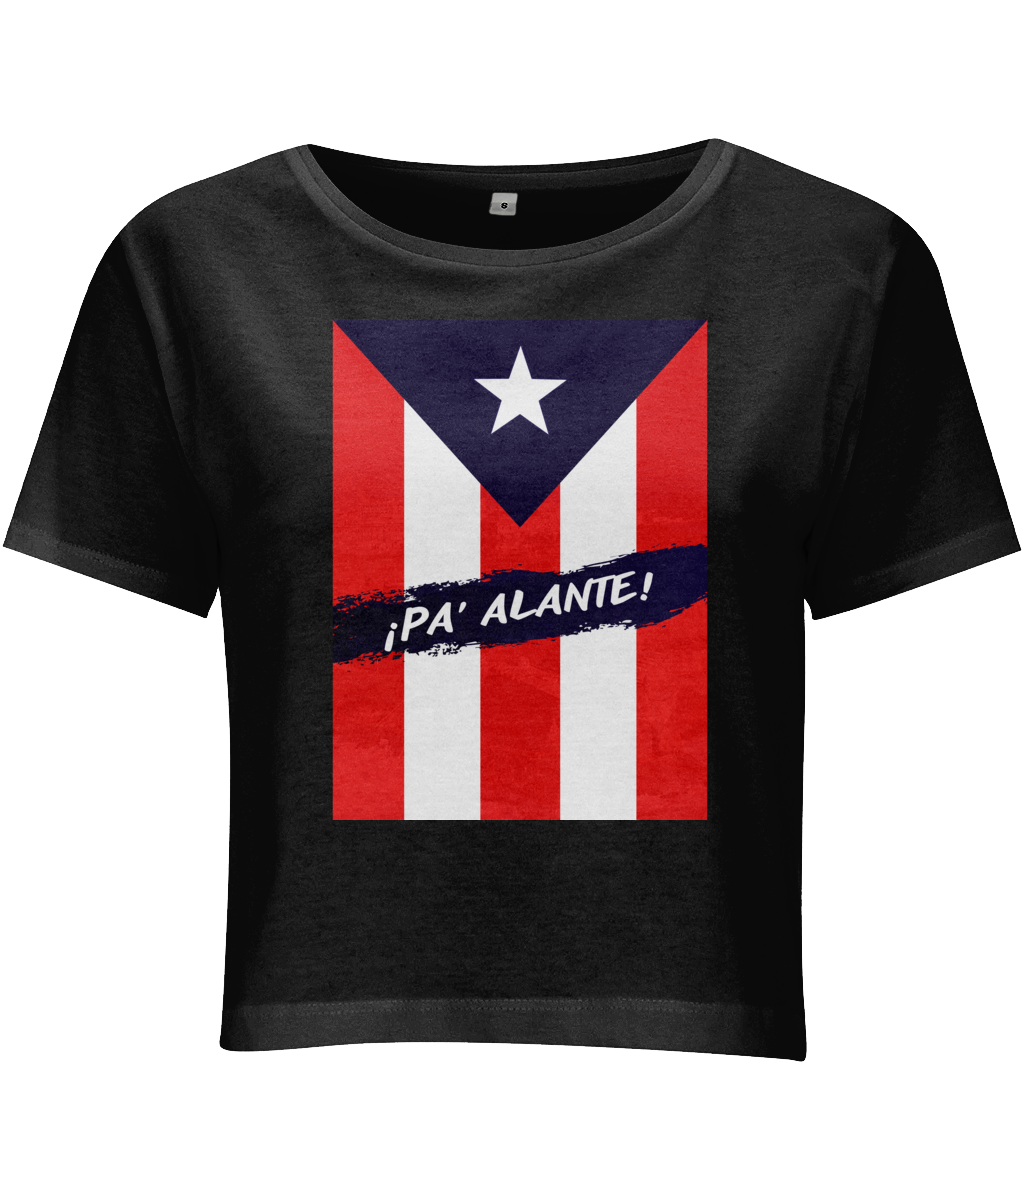 Puerto Rico - "¡Pa Alante!" Camiseta corta de punto